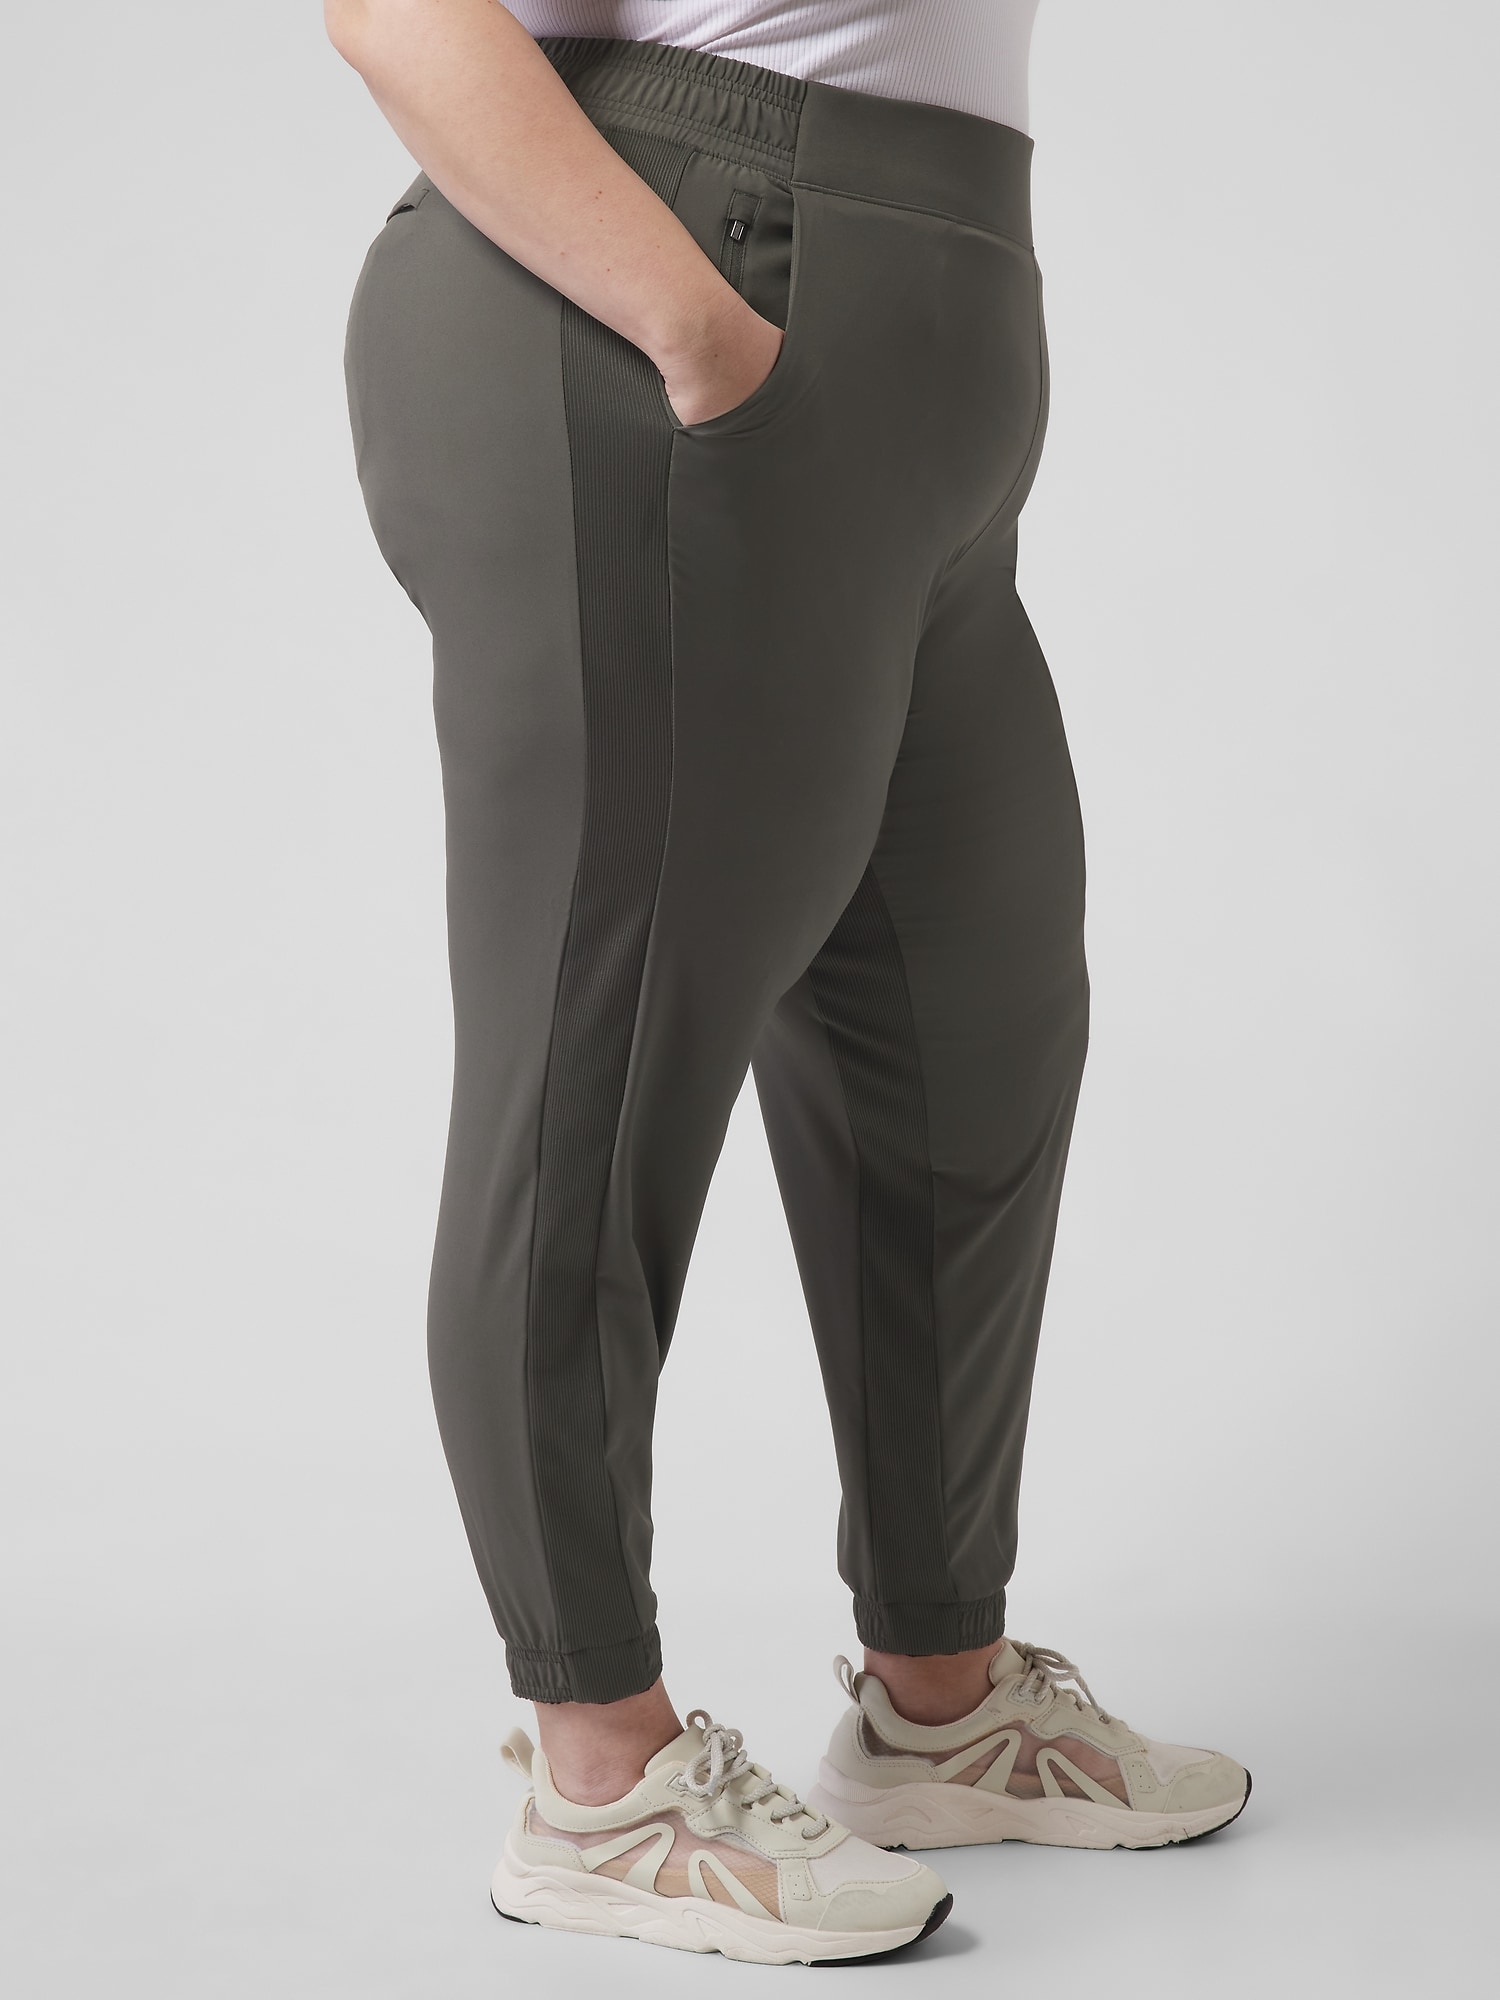 Athleta Brooklyn Jogger Pants 530631 women's size 8 Tall